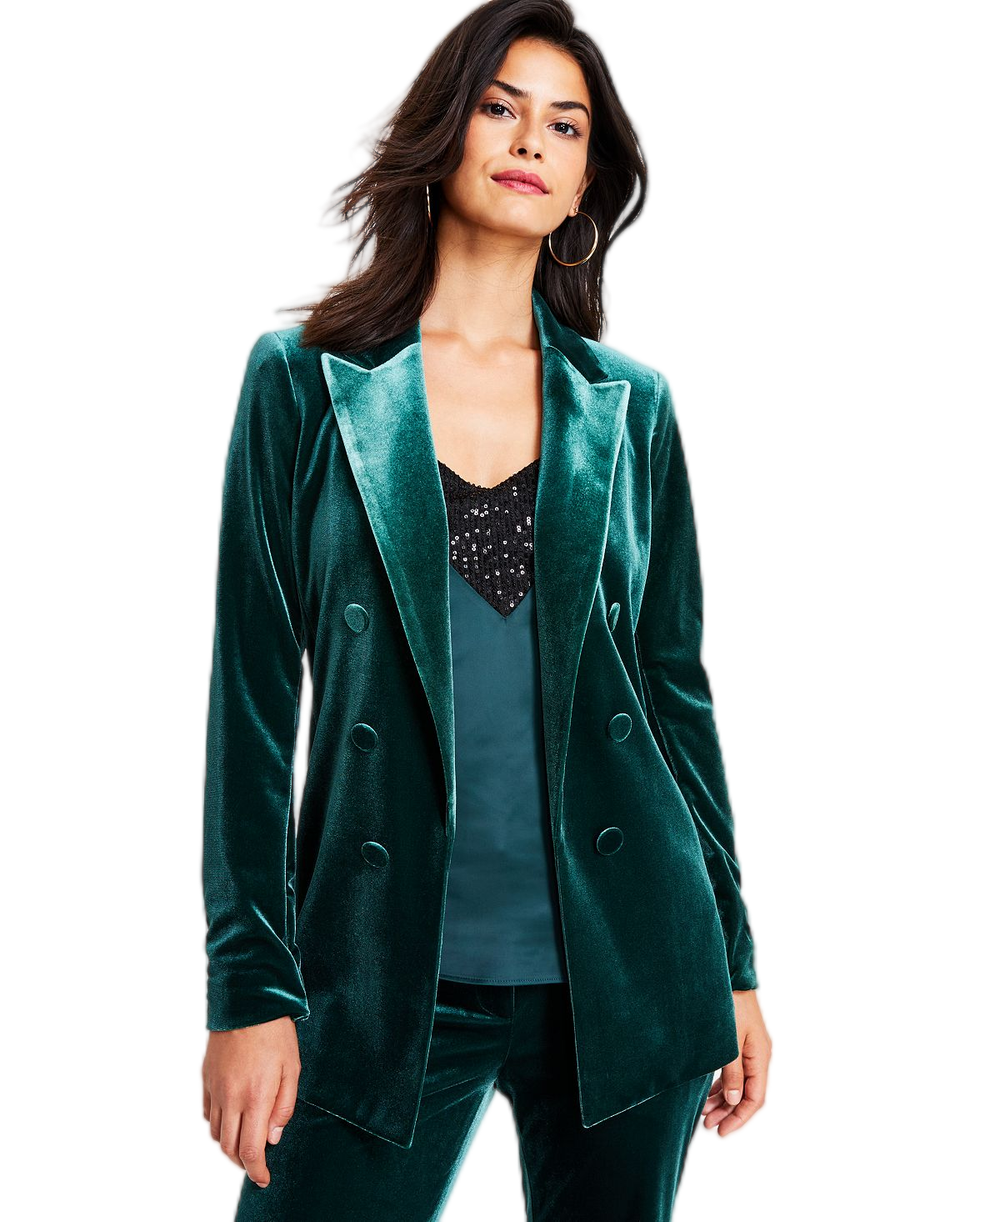 Luxurious Emerald Velvet Double-Breasted Blazer